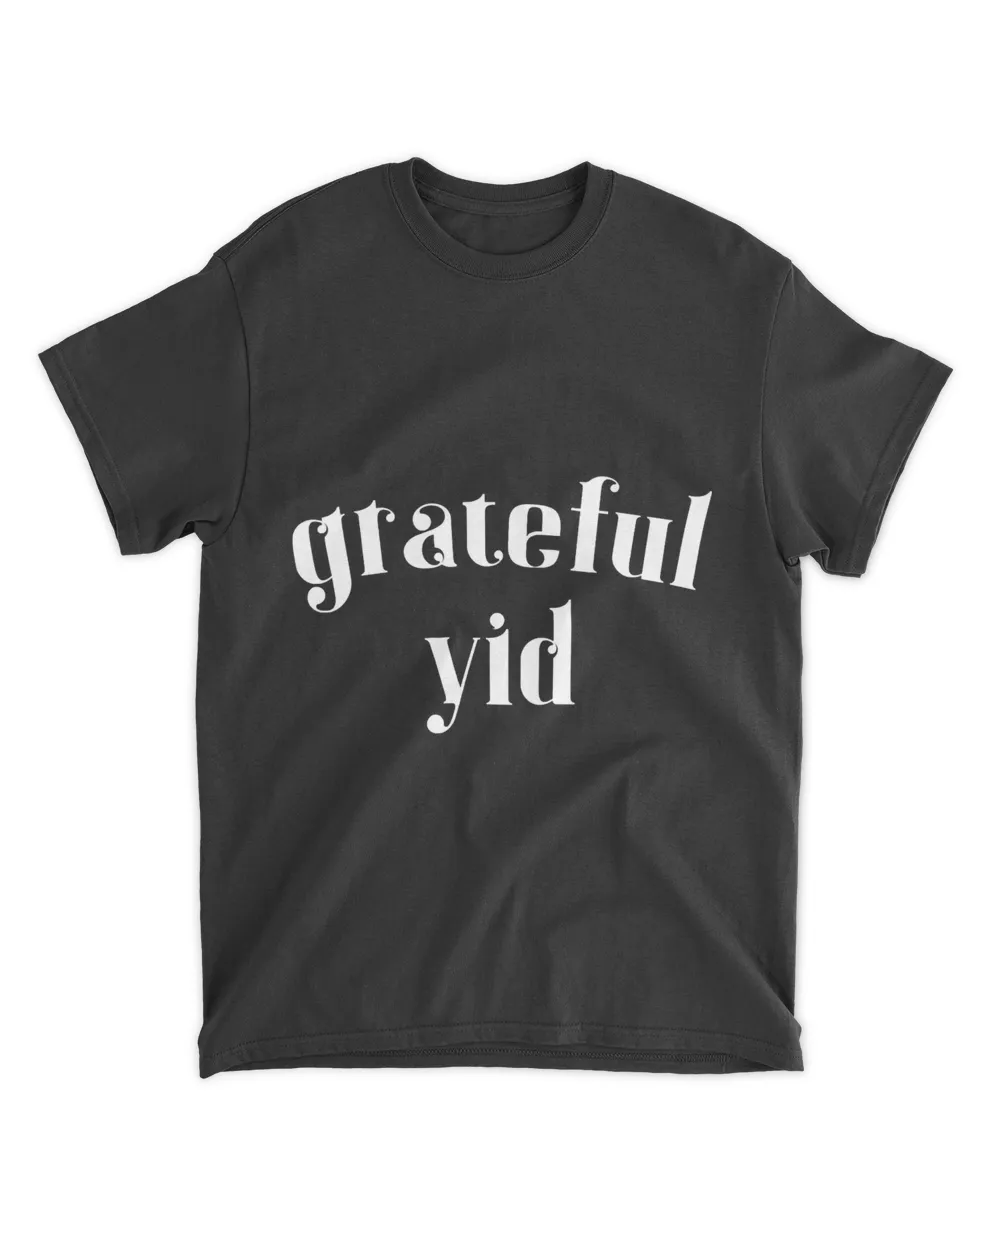 Grateful Yid Shirt Jewish Holiday Travel Summer Camp Music T Shirt